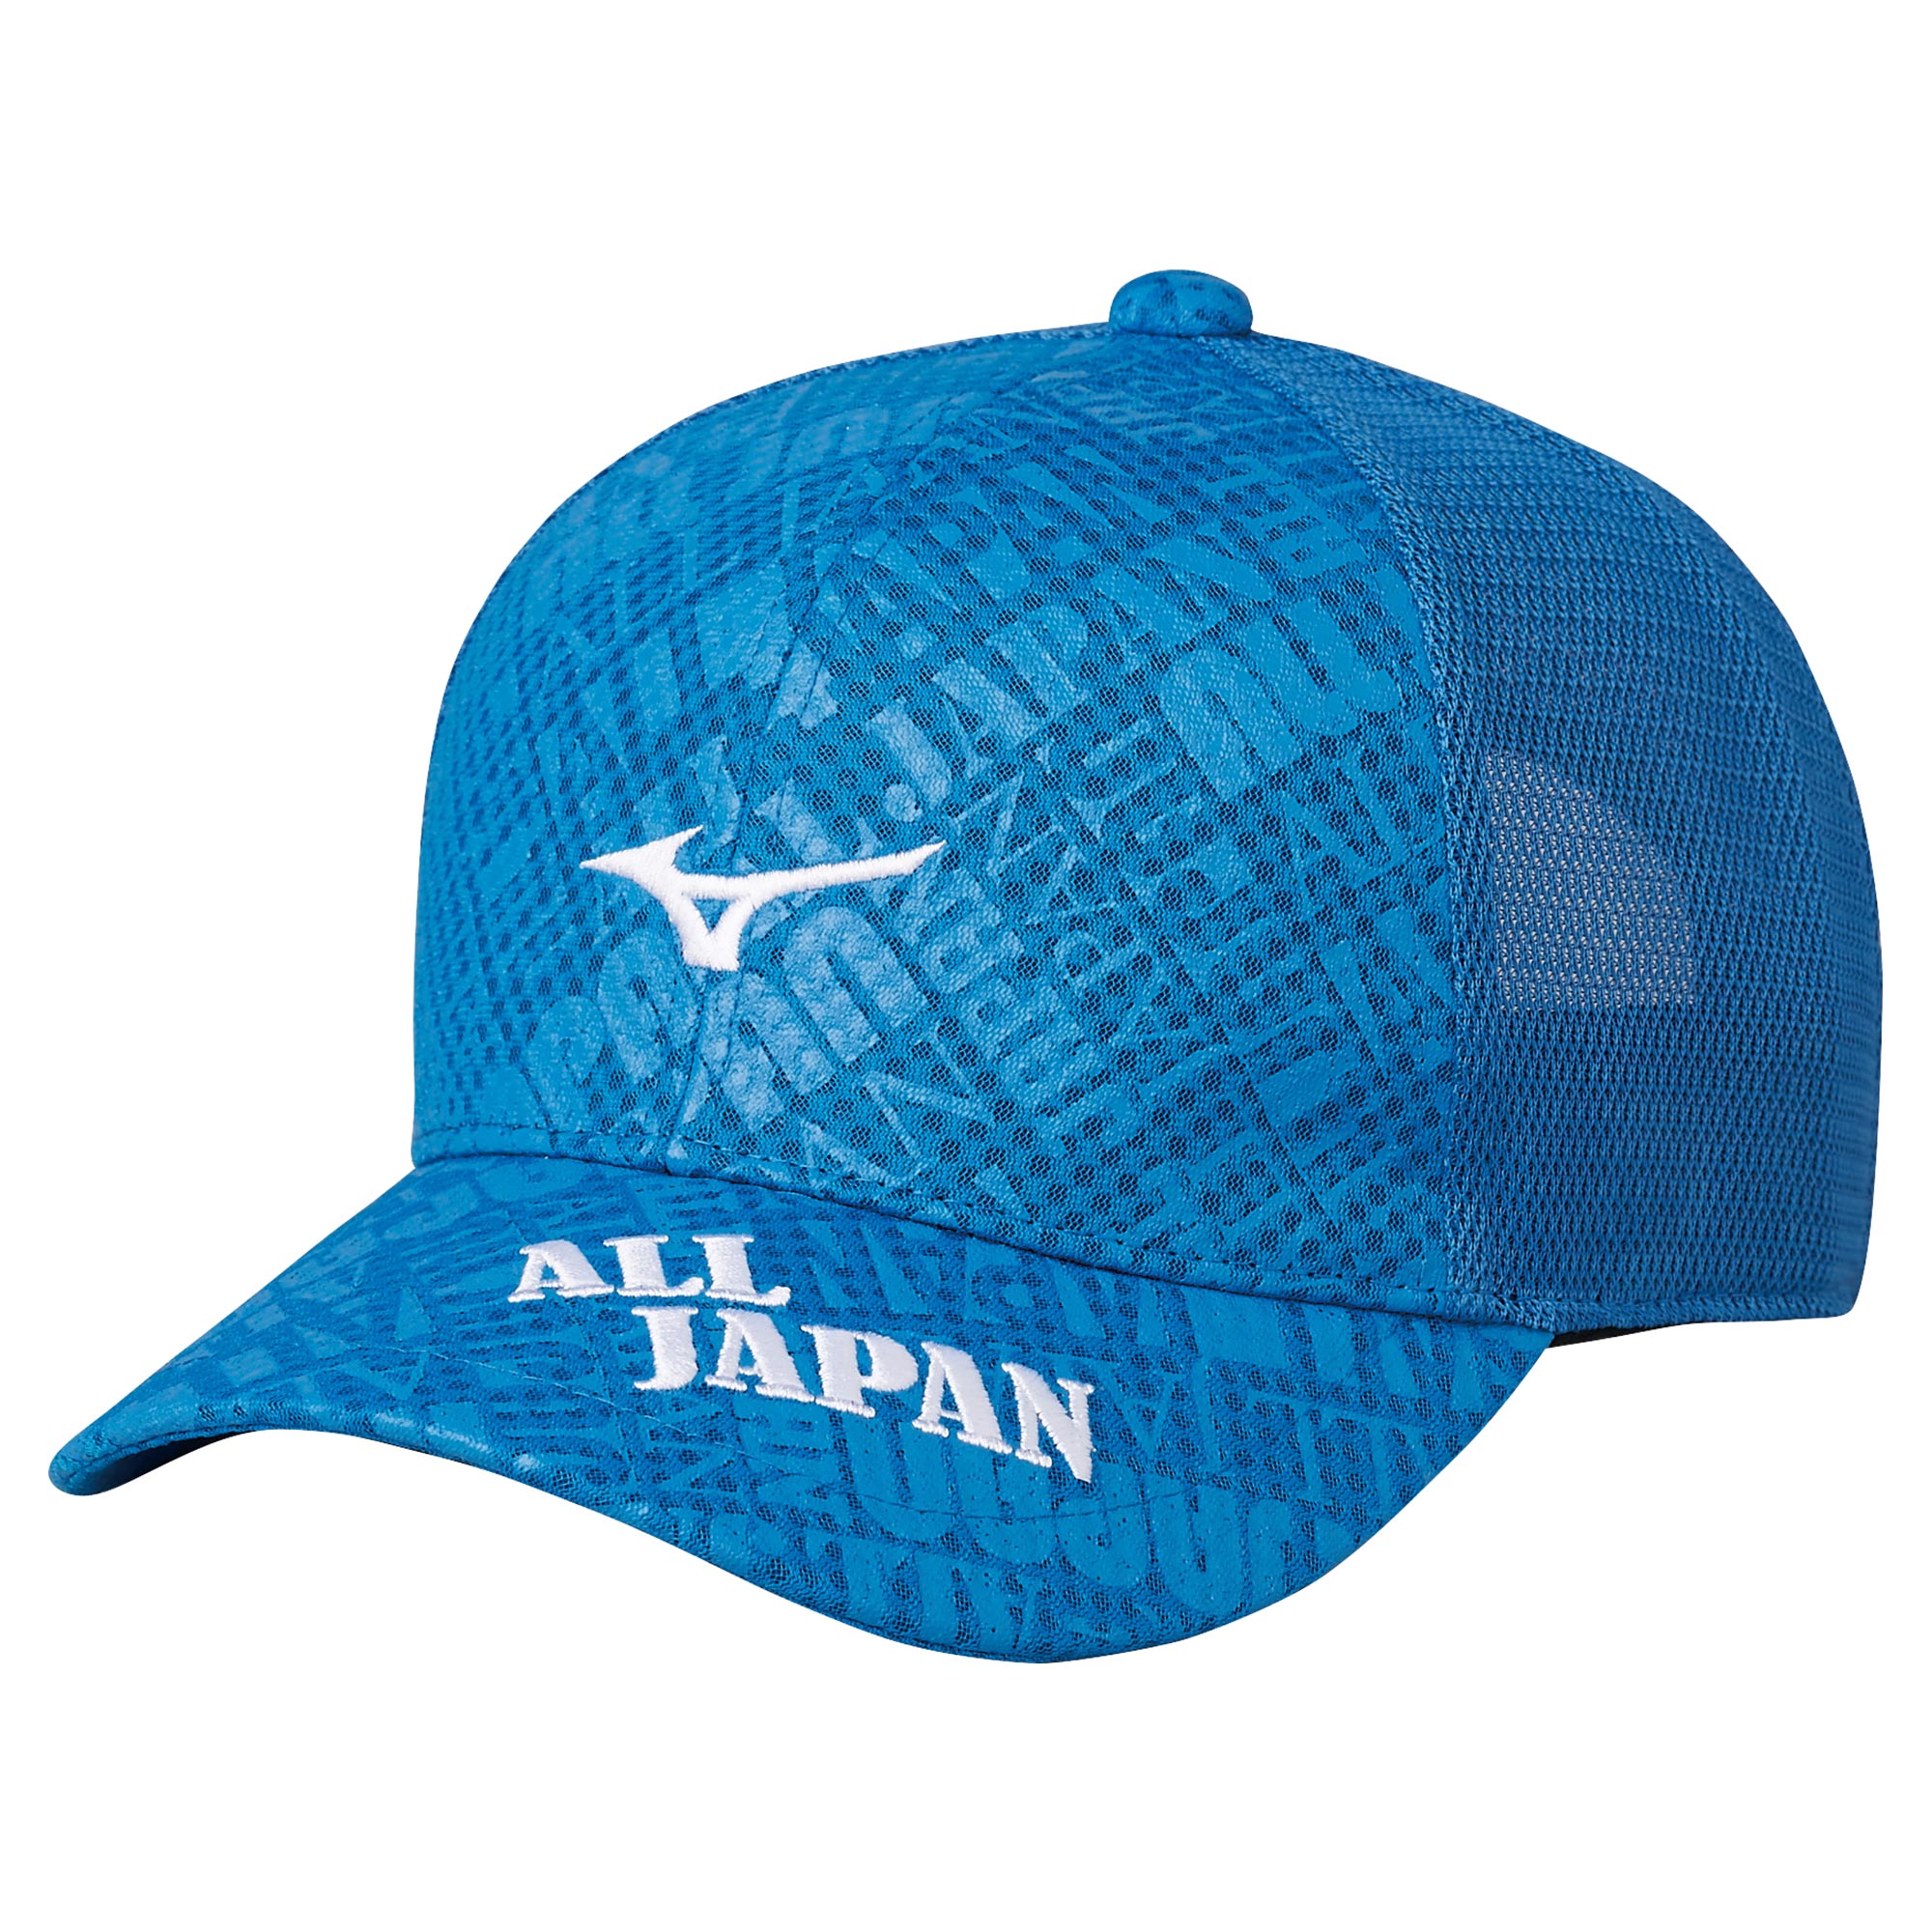 ALL JAPANキャップ[ユニセックス]|62JW2Z12|キャップ|テニス 